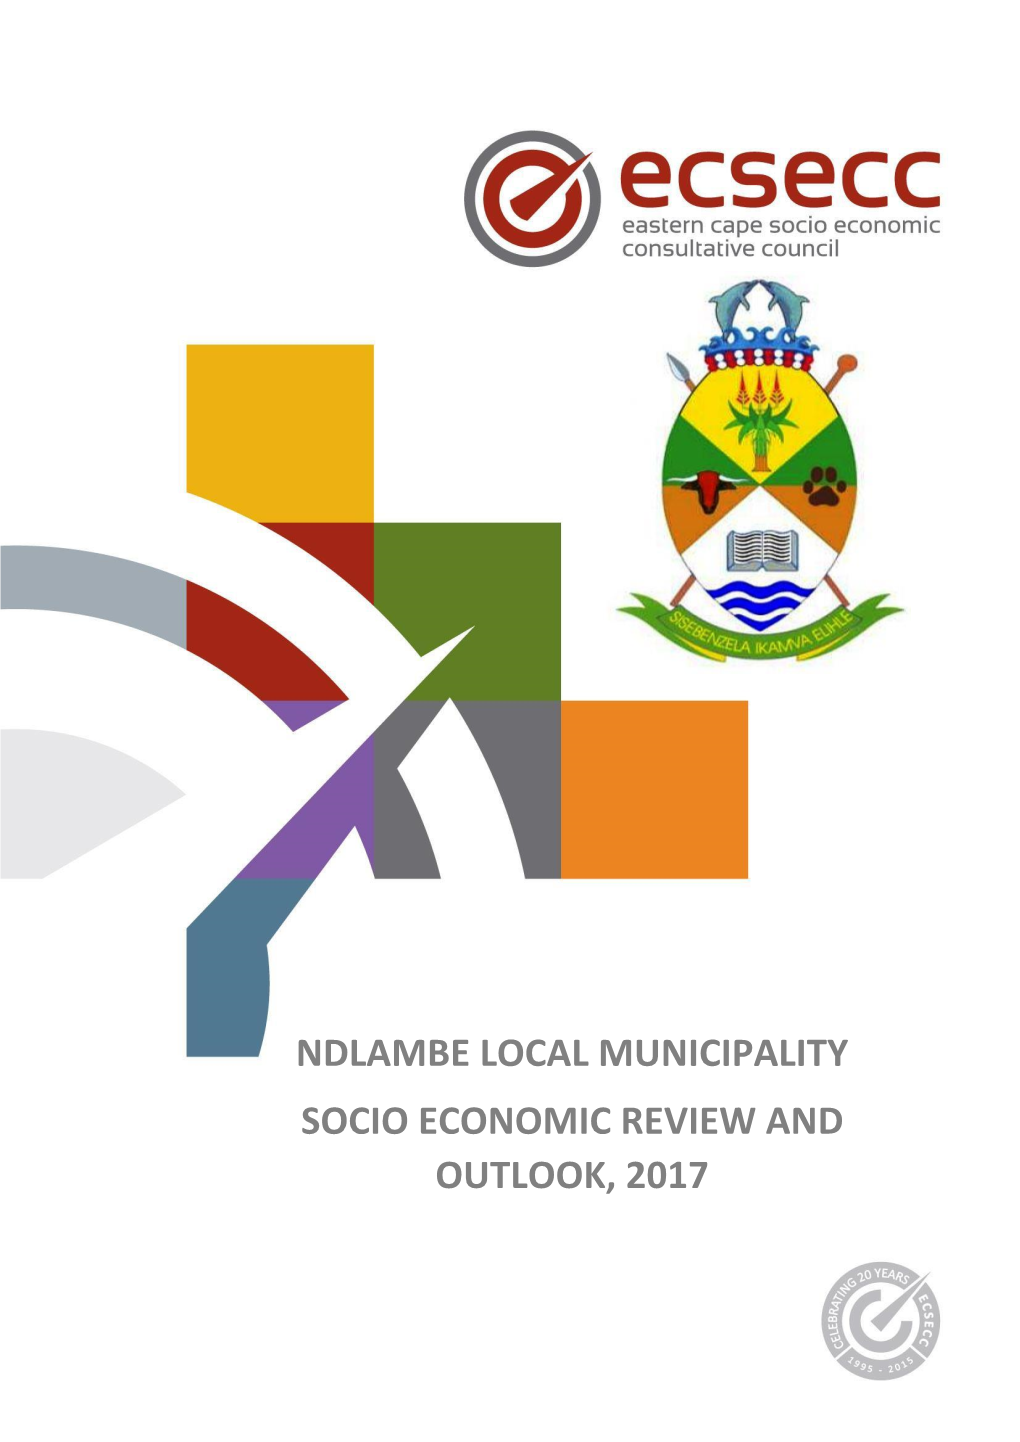 Ndlambe Local Municipality Socio Economic Review and Outlook, 2017